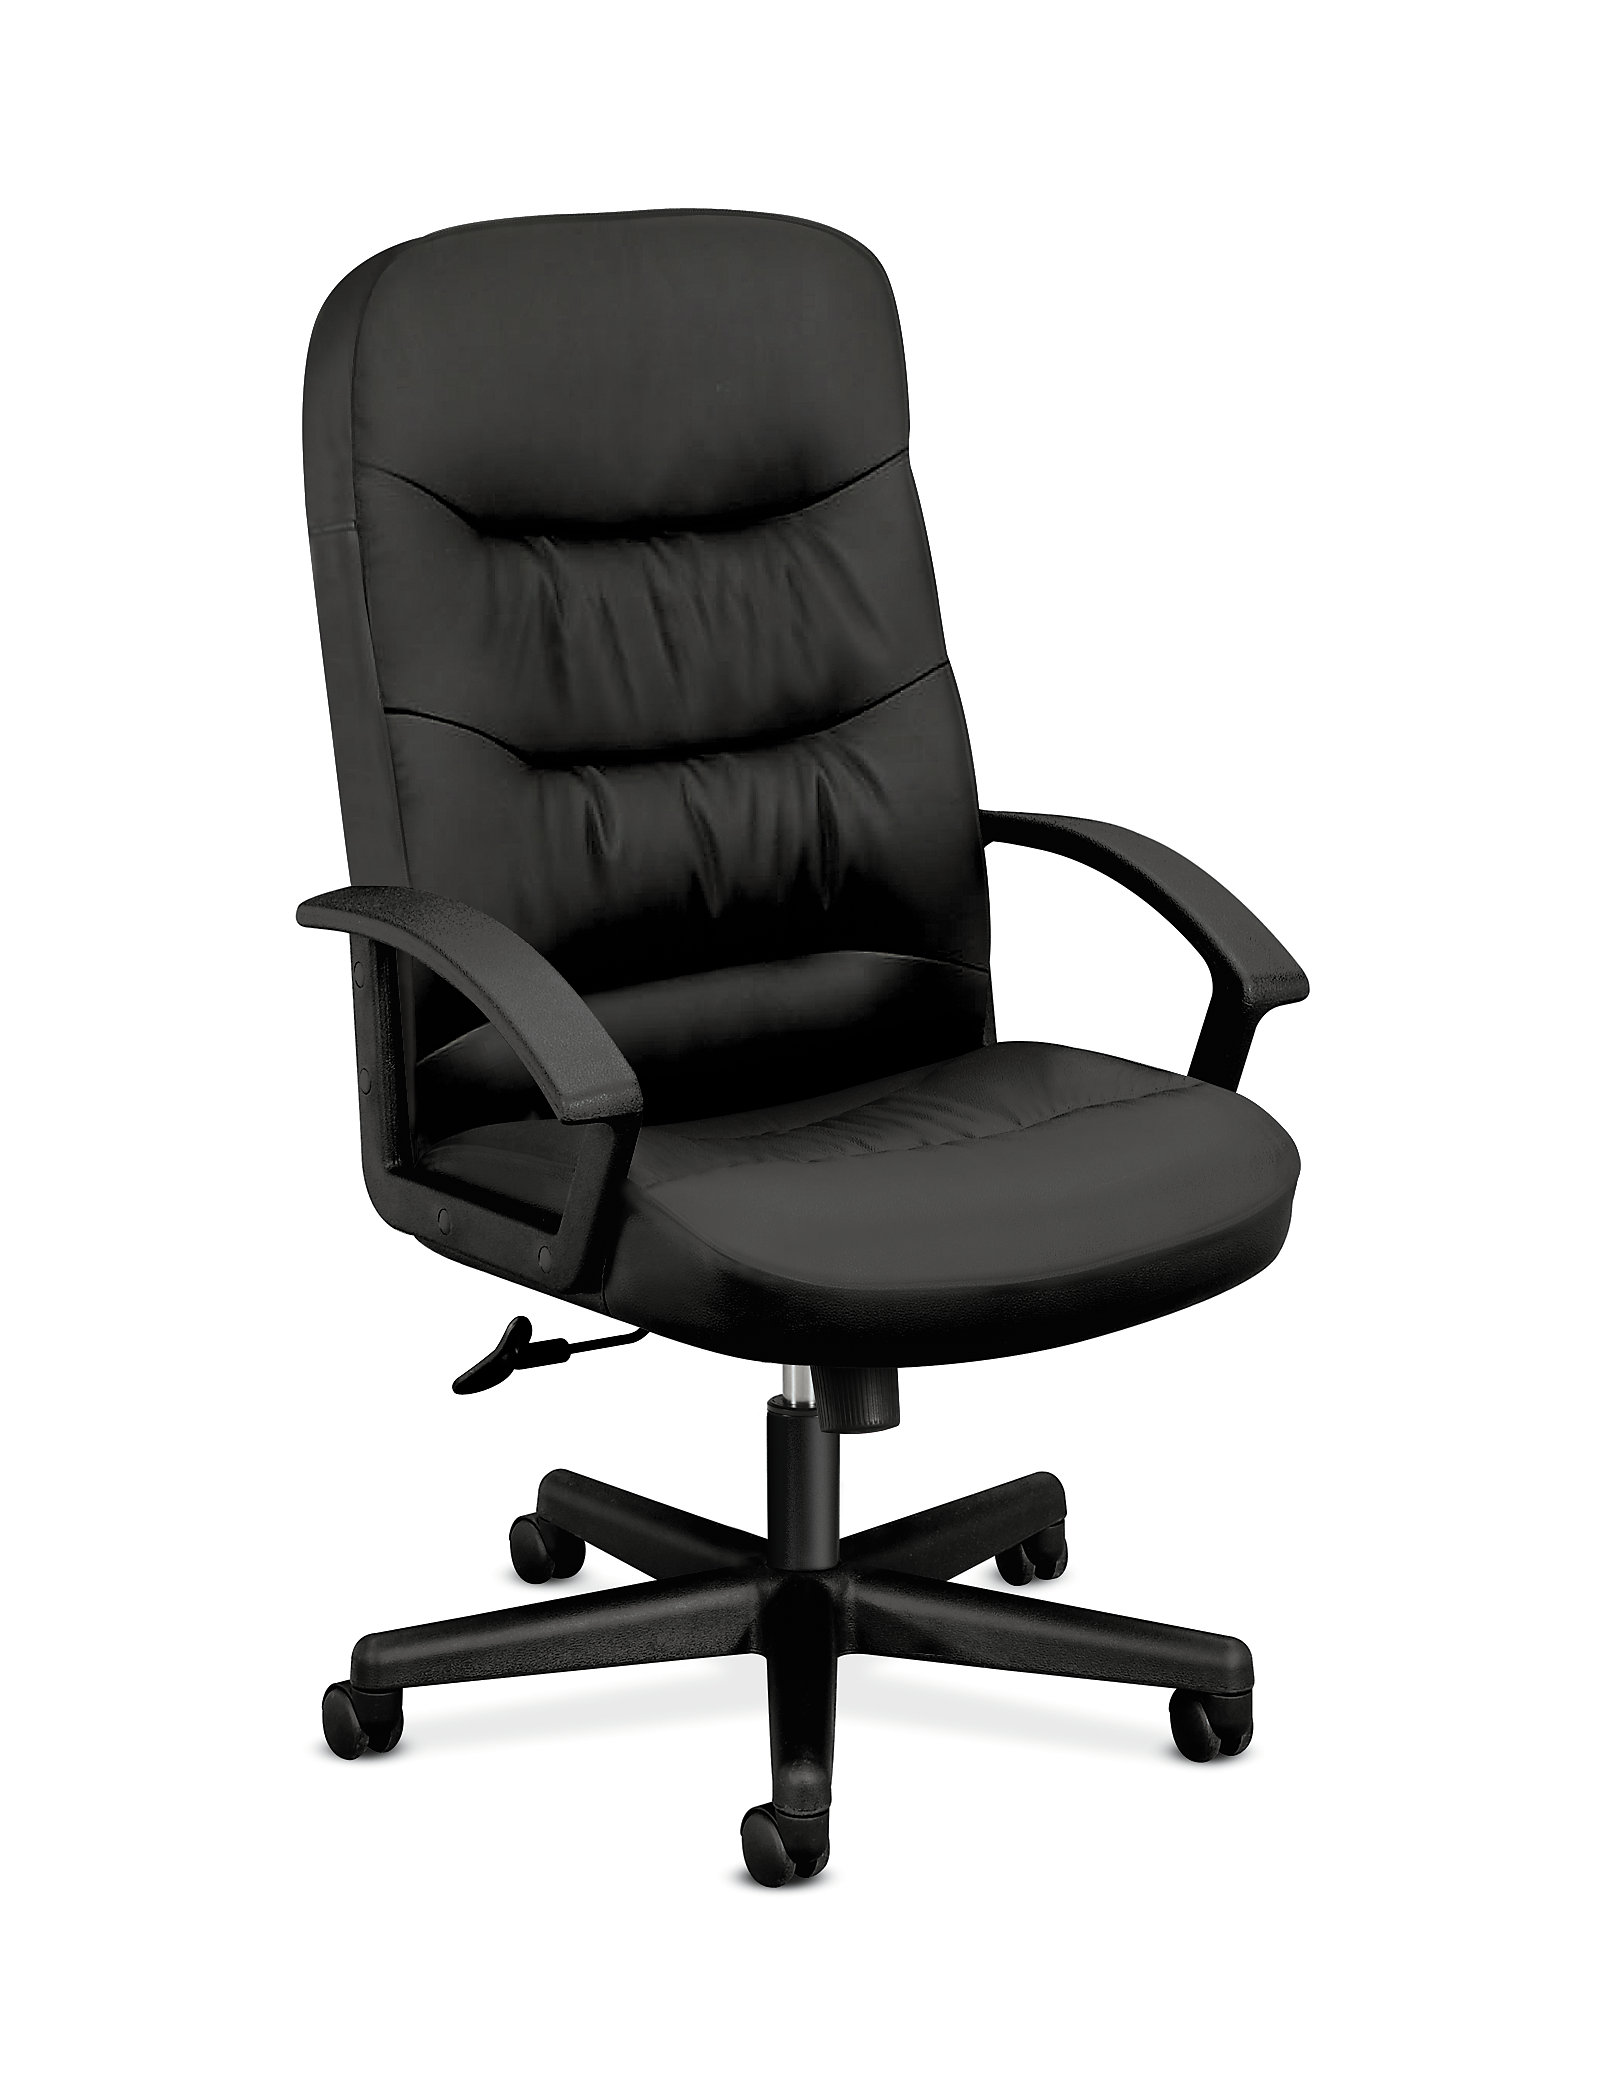 Executive High-Back Chair-HVL641-image